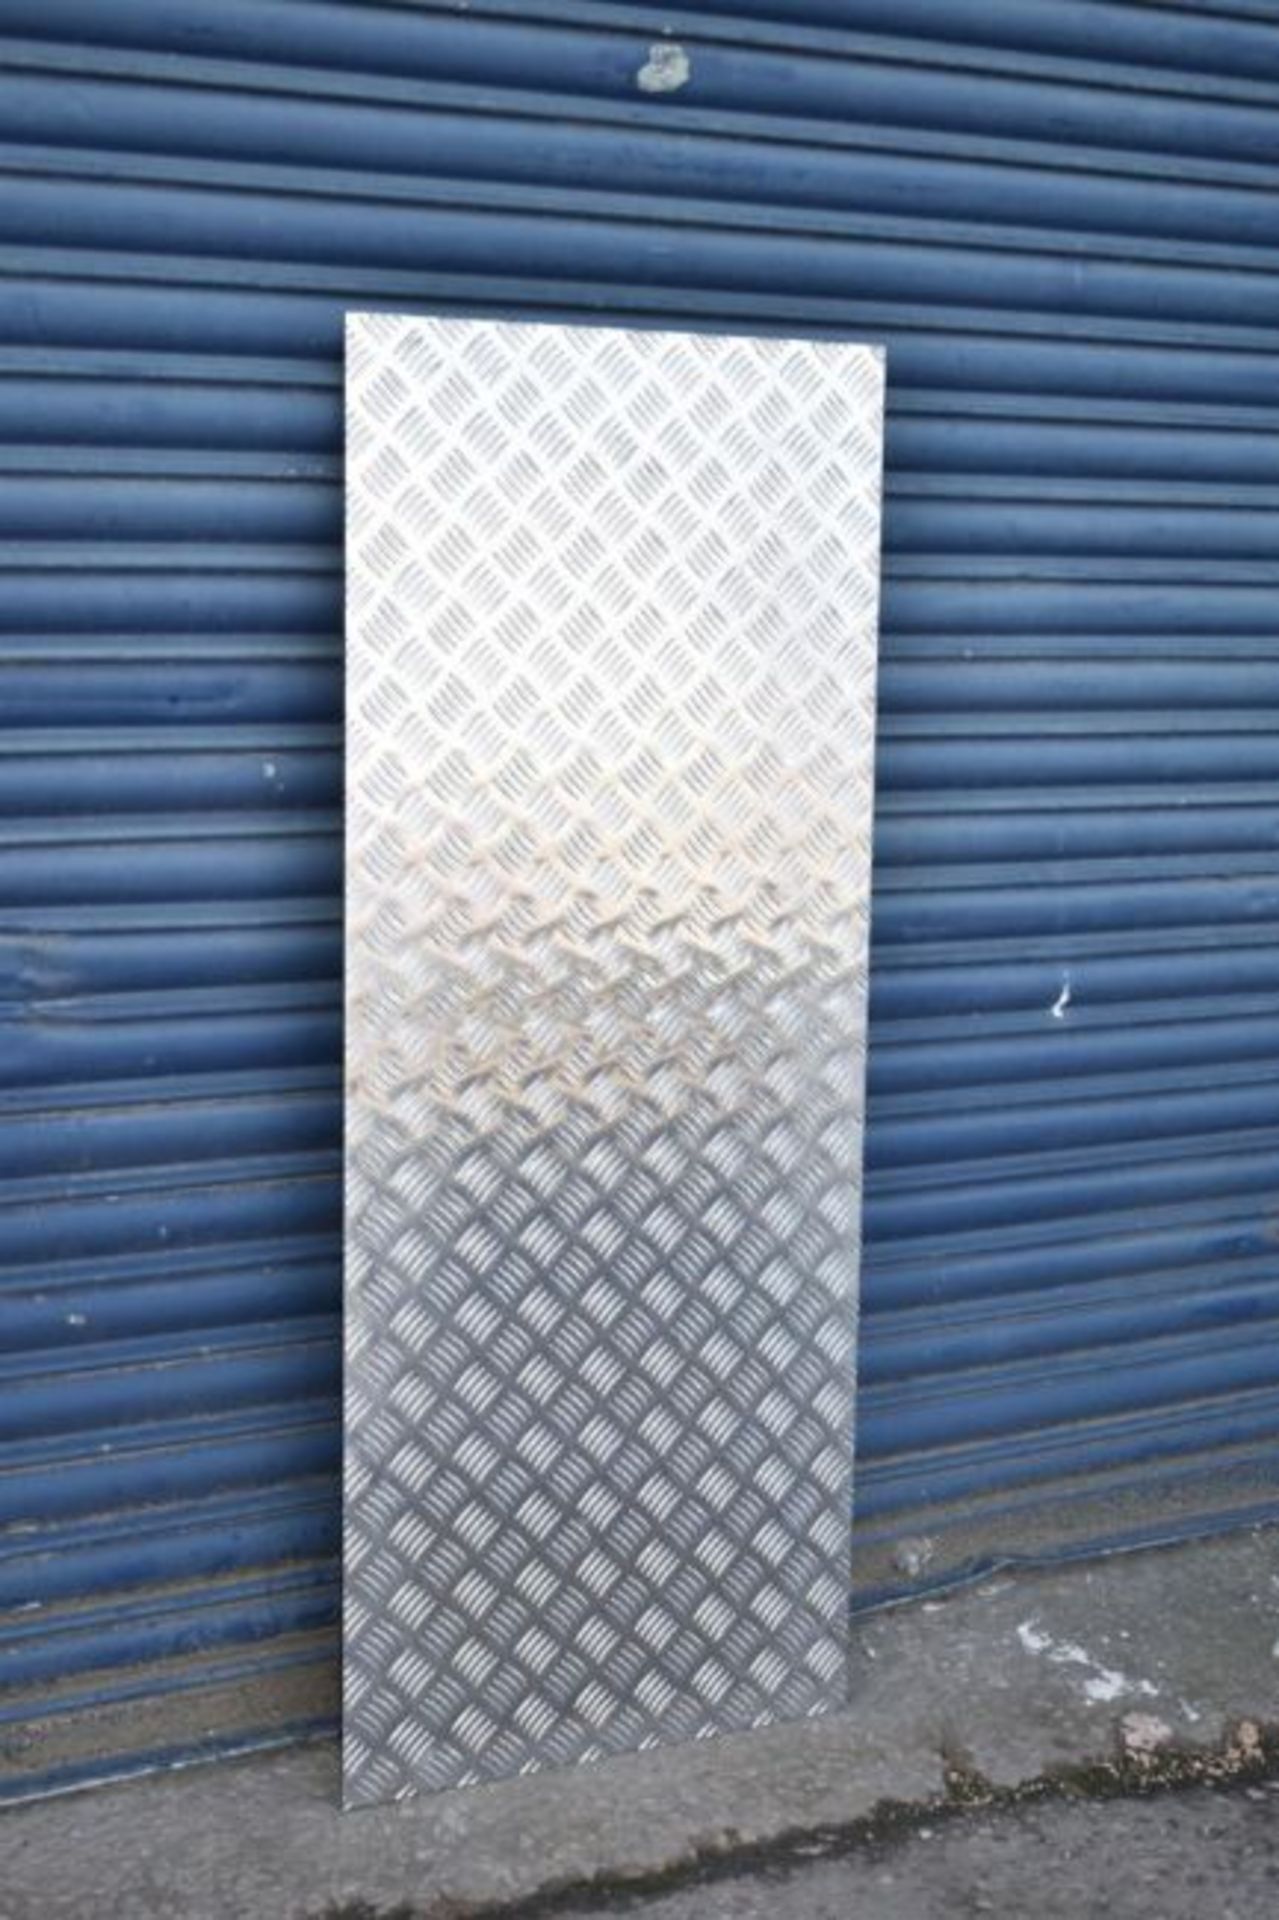 6 x Aluminium Tread Checker Plates - Size 125 x 50.5 x 0.3 cms - None Slip Floor Plate Suitable - Image 6 of 7